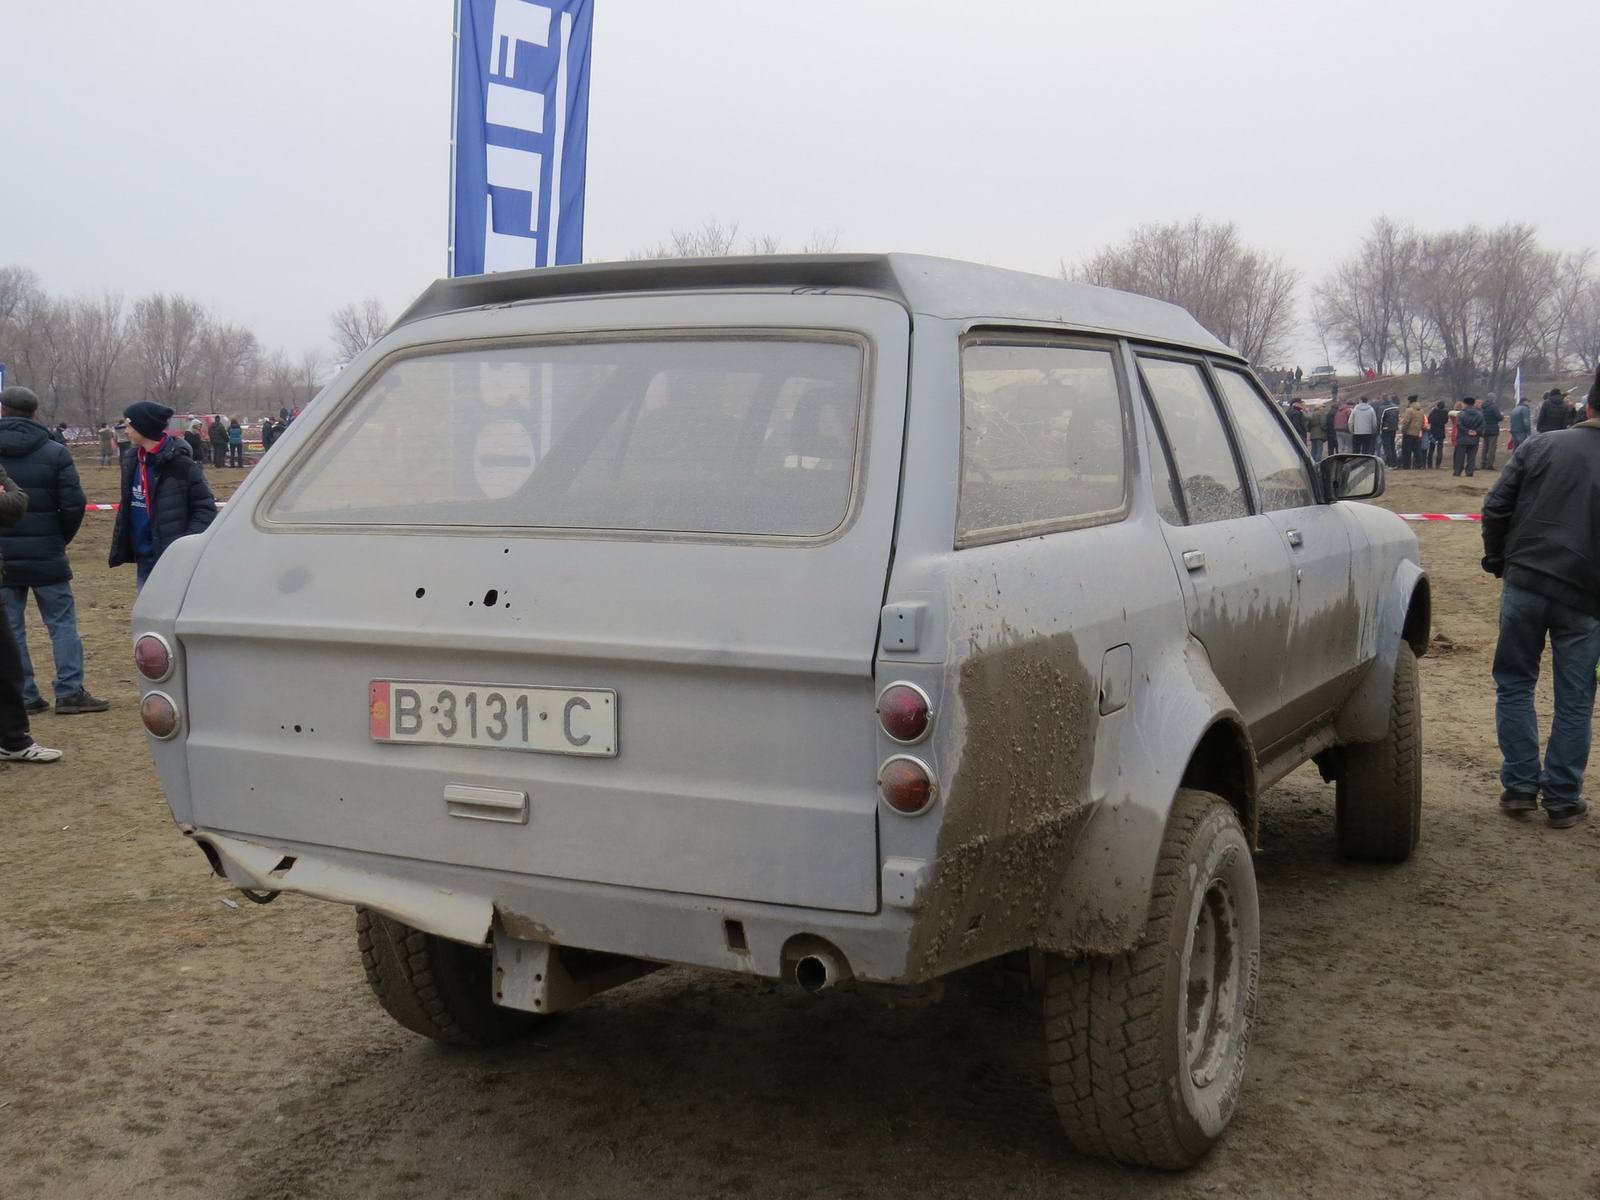 2000 (?). САМАВТО. Кыргызстан. Бишкек. Автор неизвестен. Агрегатная база Ford Granada